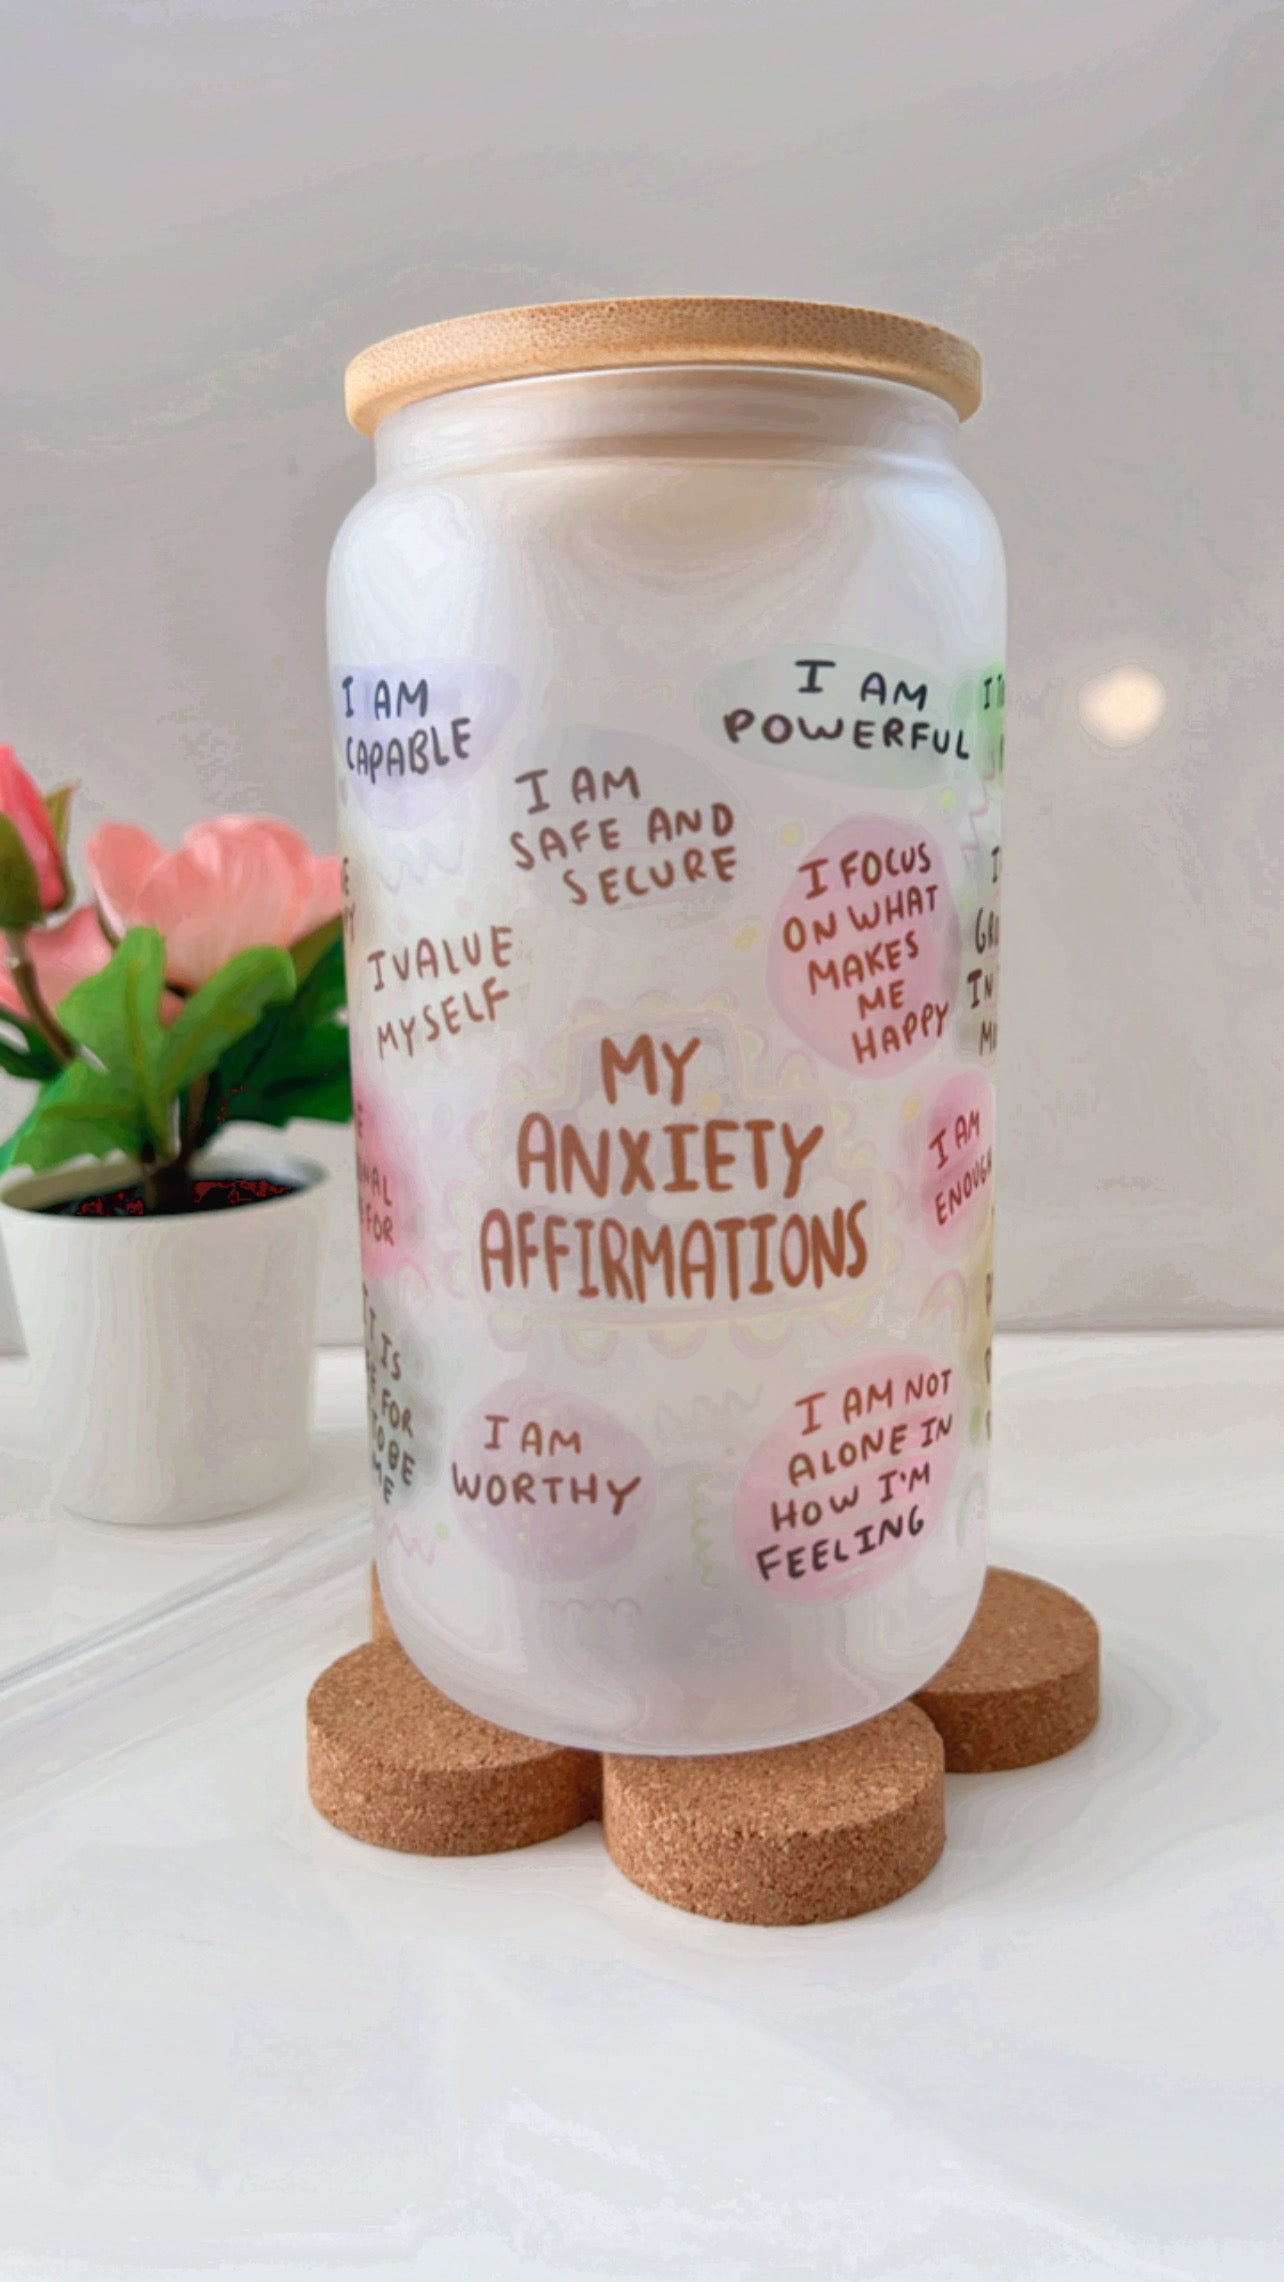 My Anxiety Affirmations Coffee Mug.